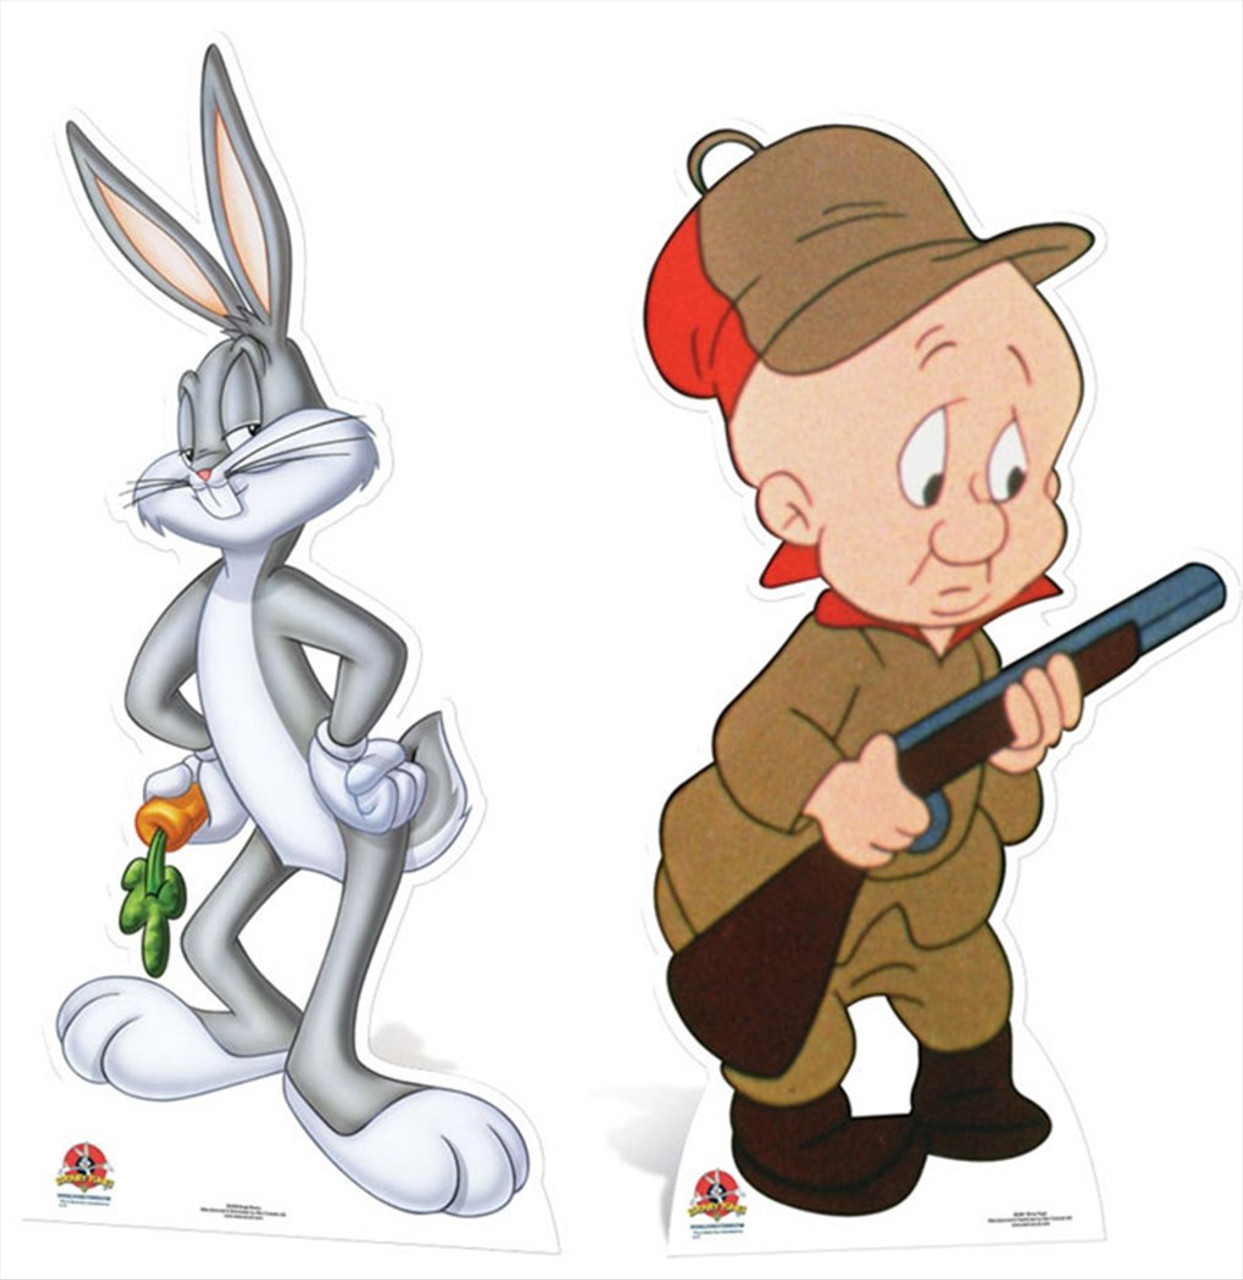 Bugs_Bunny_and_Elmer_Fudd_Looney_Tunes_cardboard_cutout_set_buy_now_at_starstills__31464.1403468478.jpg